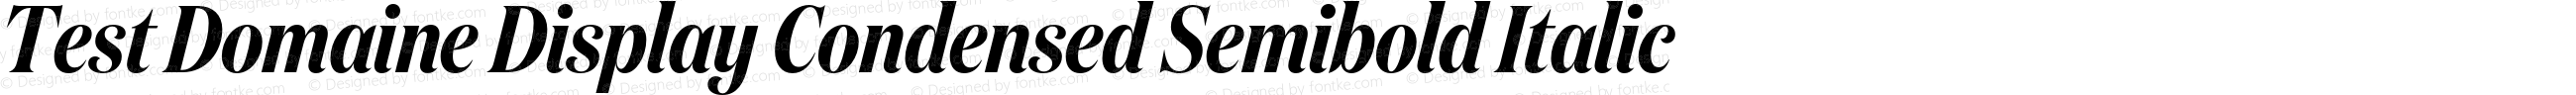 Test Domaine Display Condensed Semibold Italic